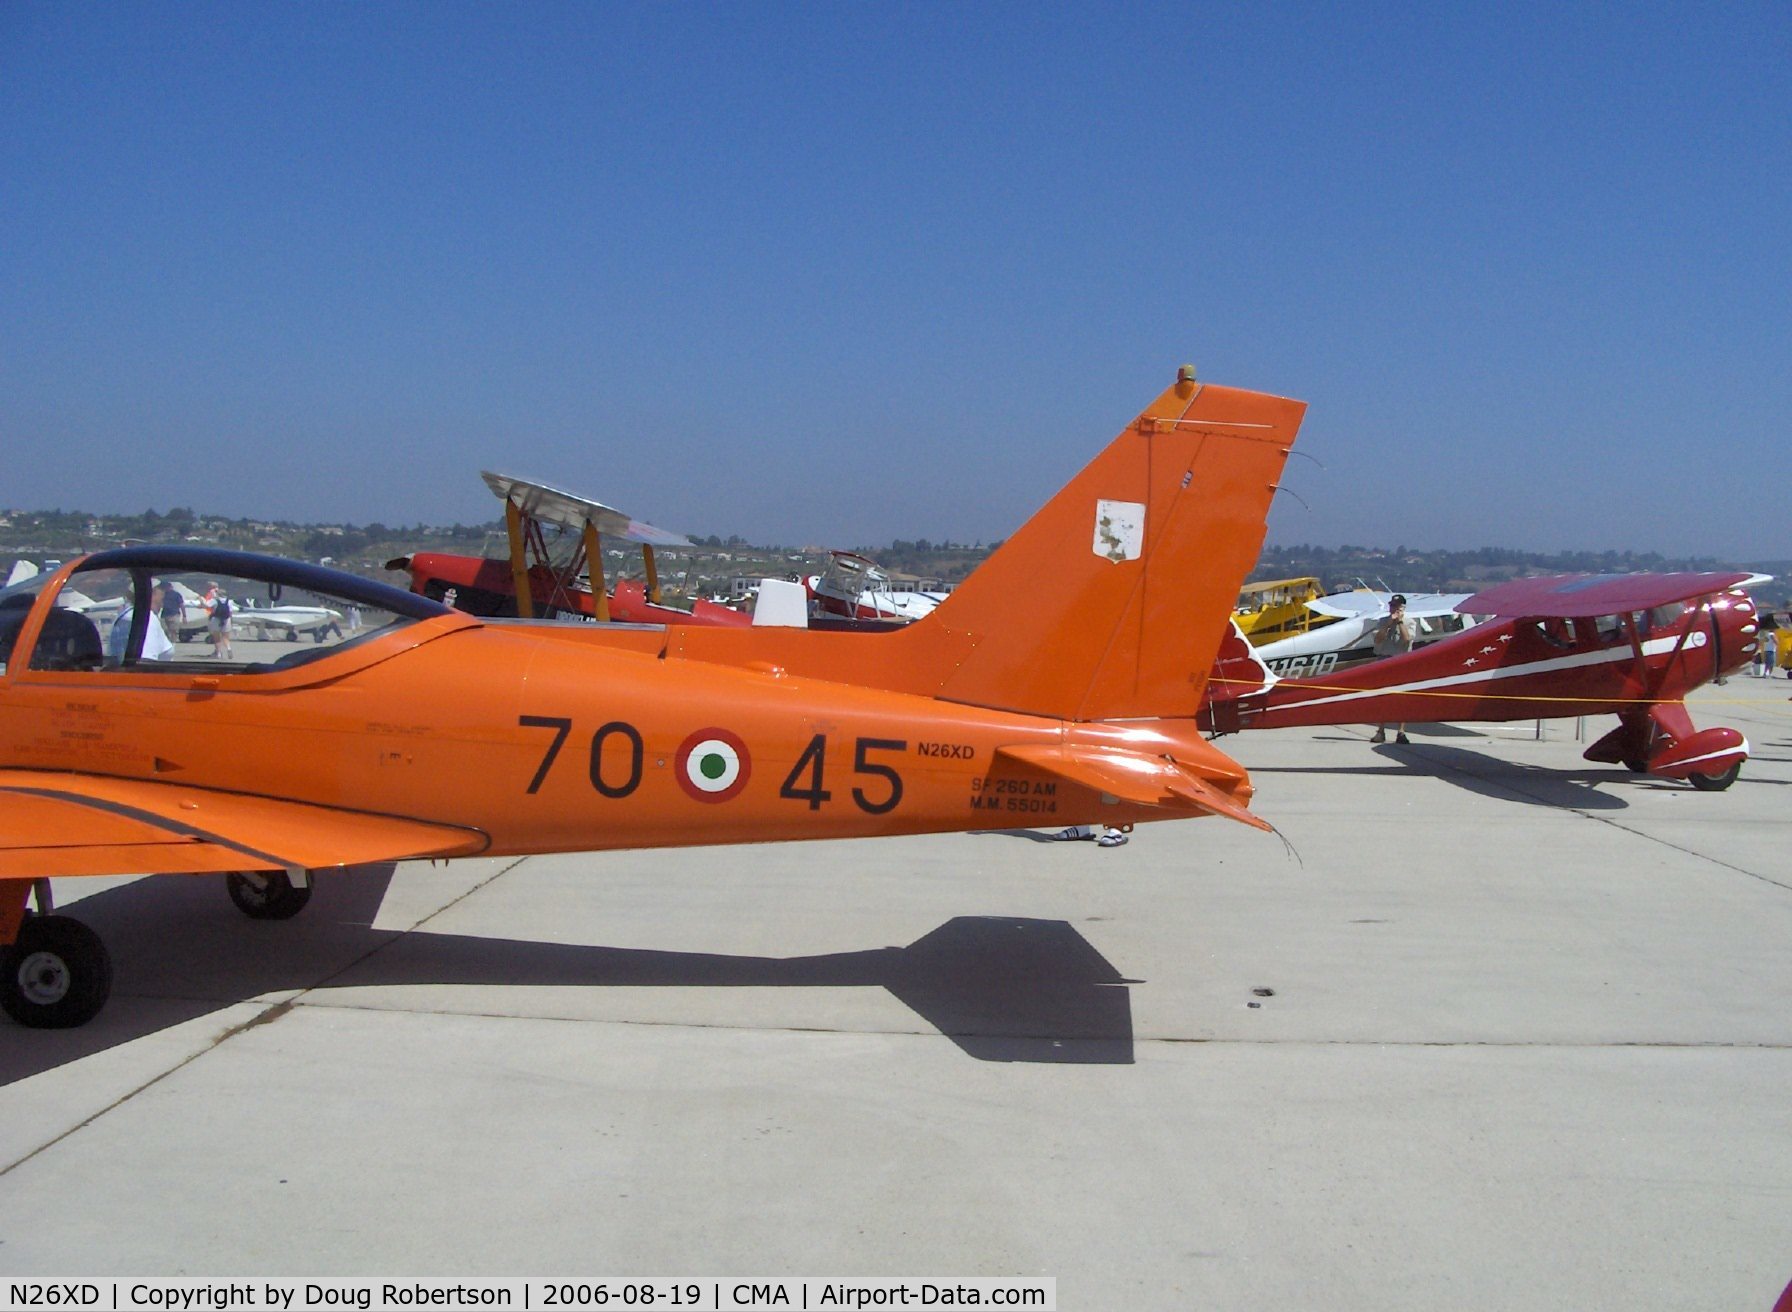 N26XD, 1987 SIAI-Marchetti F-260C C/N 40-016, SIAI-Marchetti F.260C, Lycoming O-540-D4A5 260 Hp, tail data